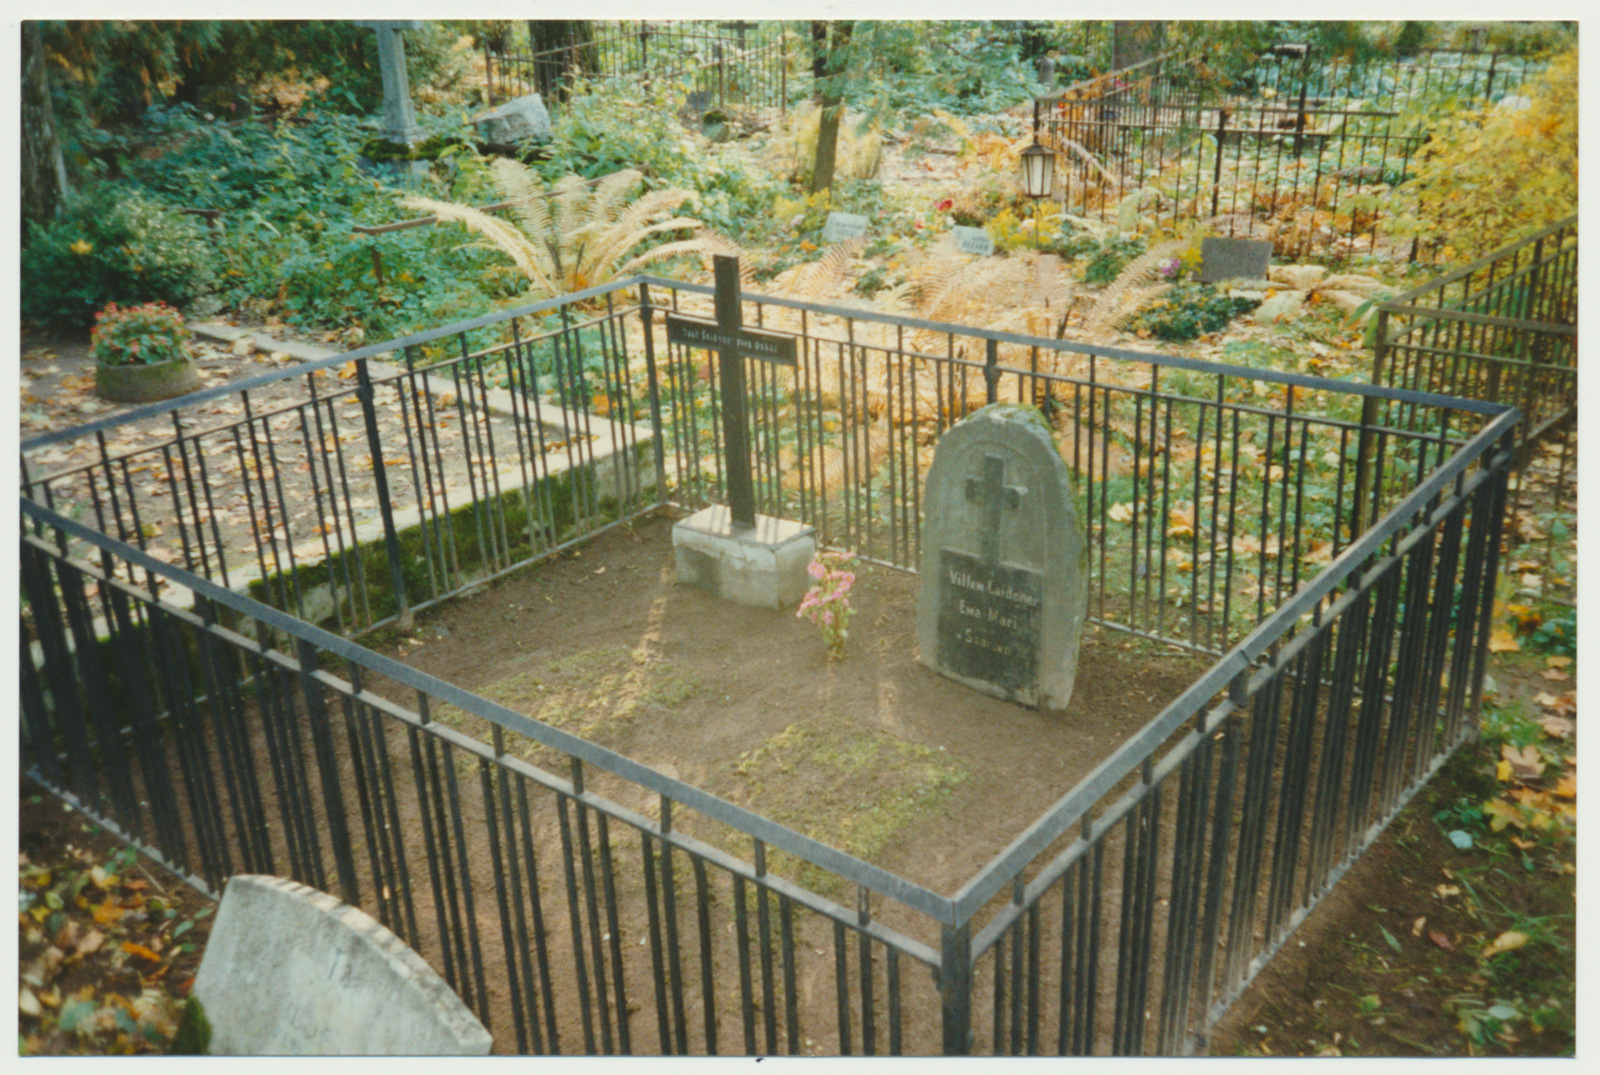 foto, Viljandi, Vana kalmistu, hauakivi, rist- Laidoneri hauaplats, 1993, foto J. Pihlak, värviline